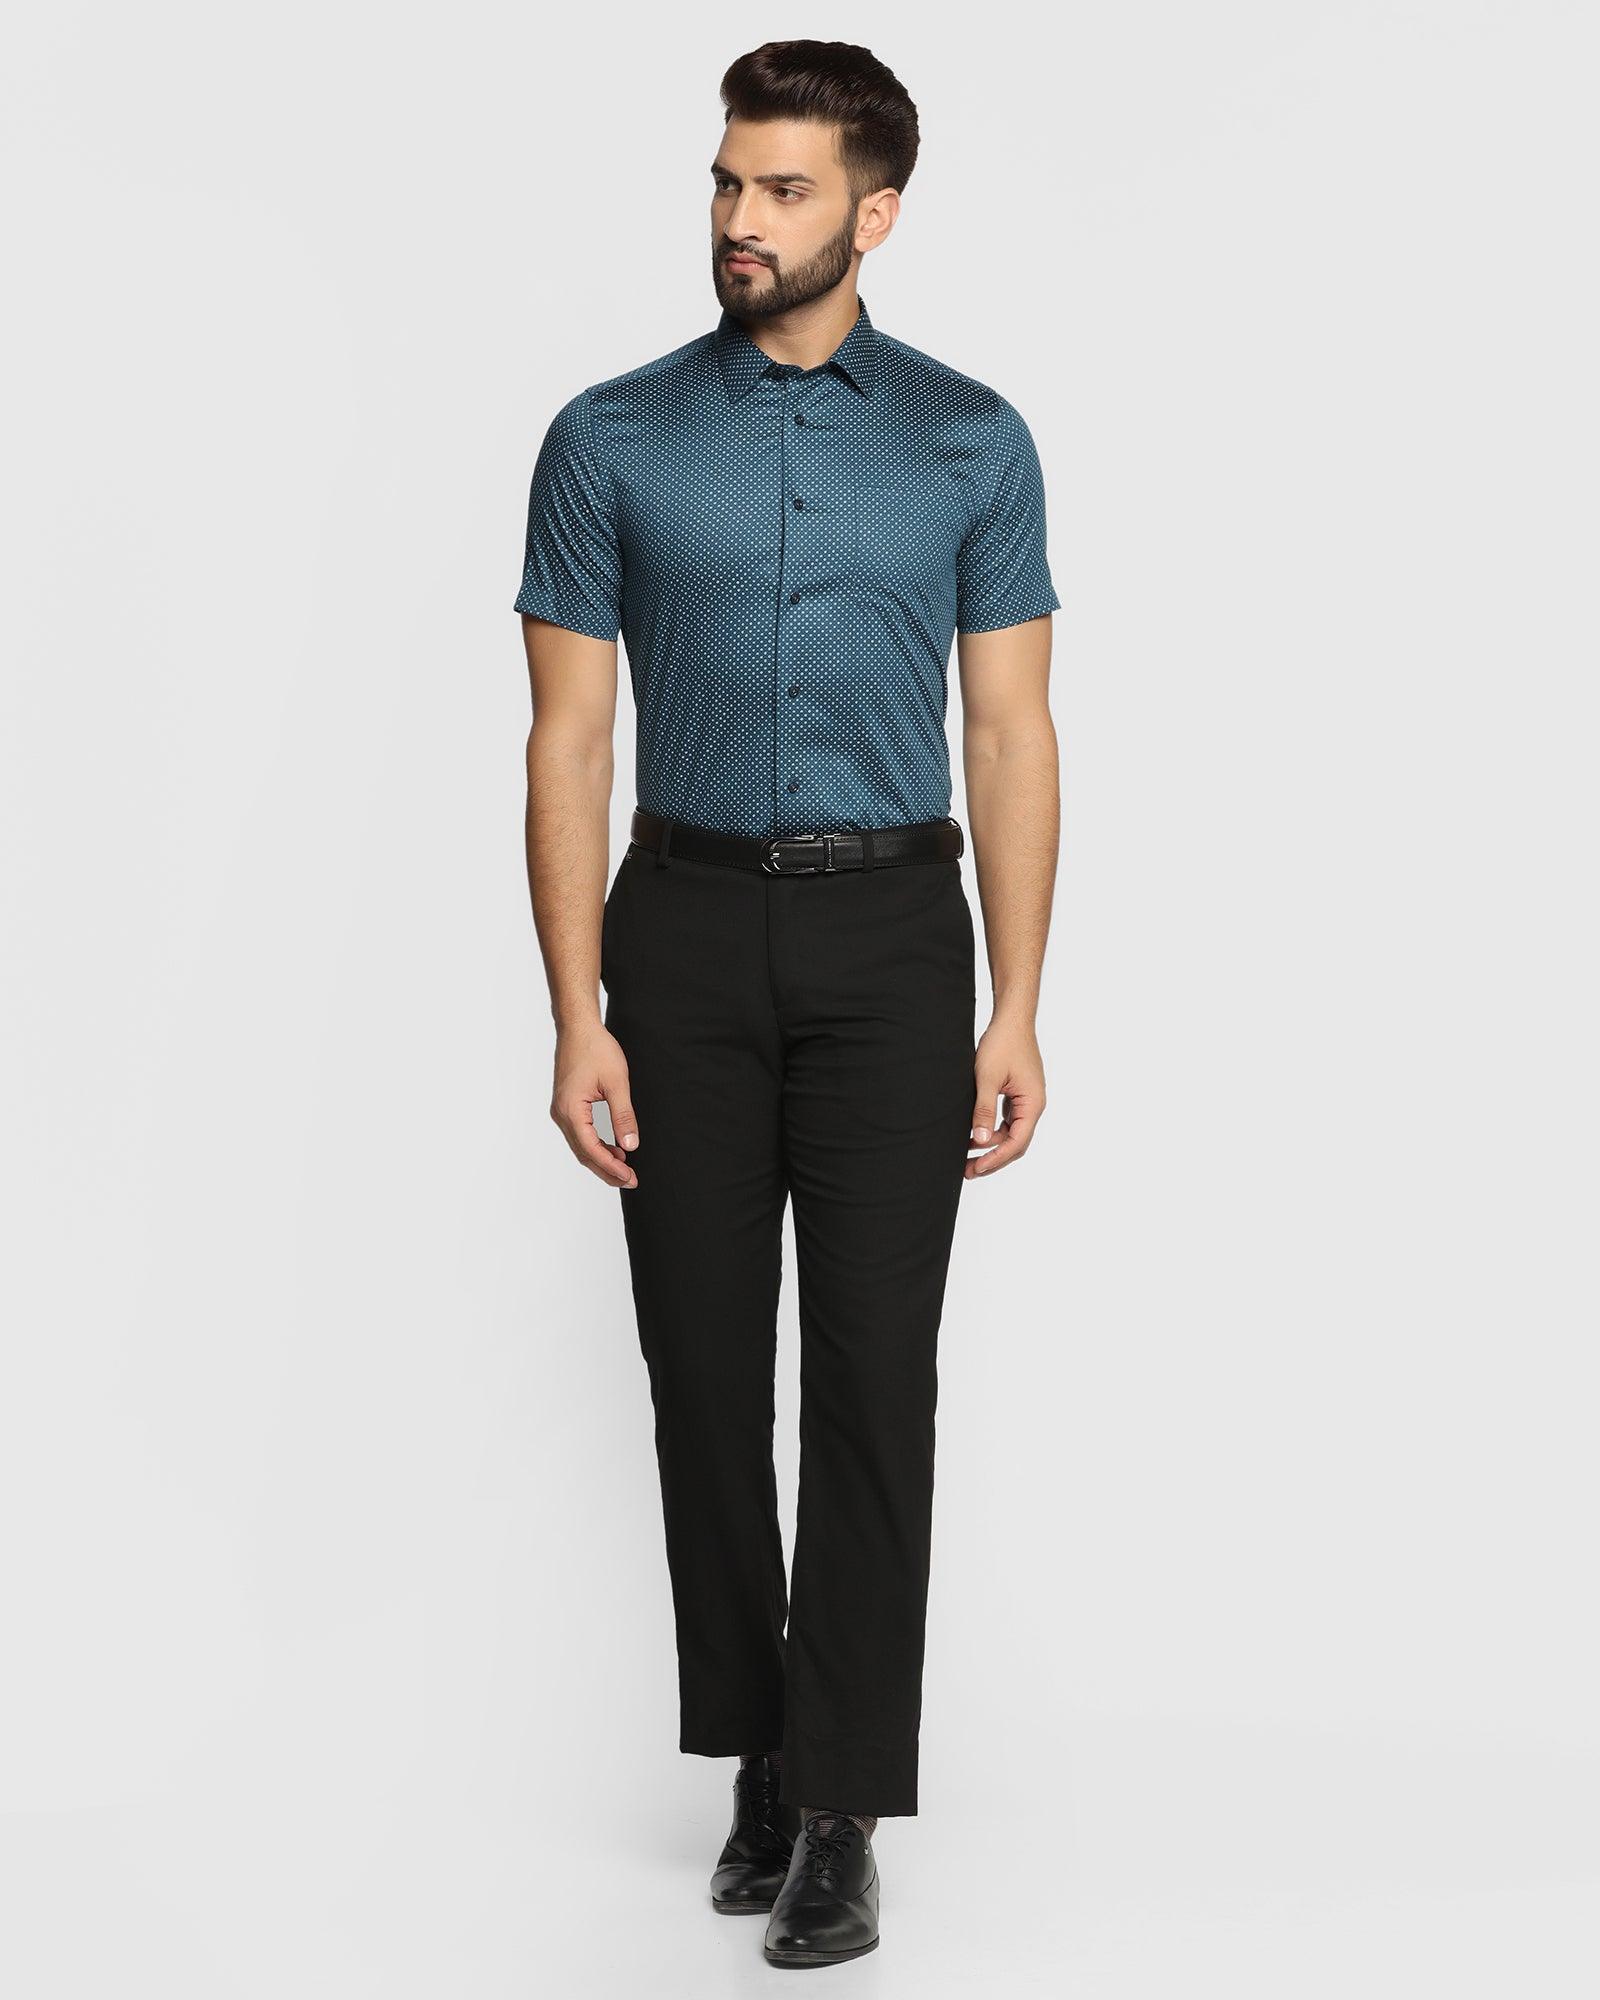 Formal Half Sleeve Blue Printed Shirt - Nate